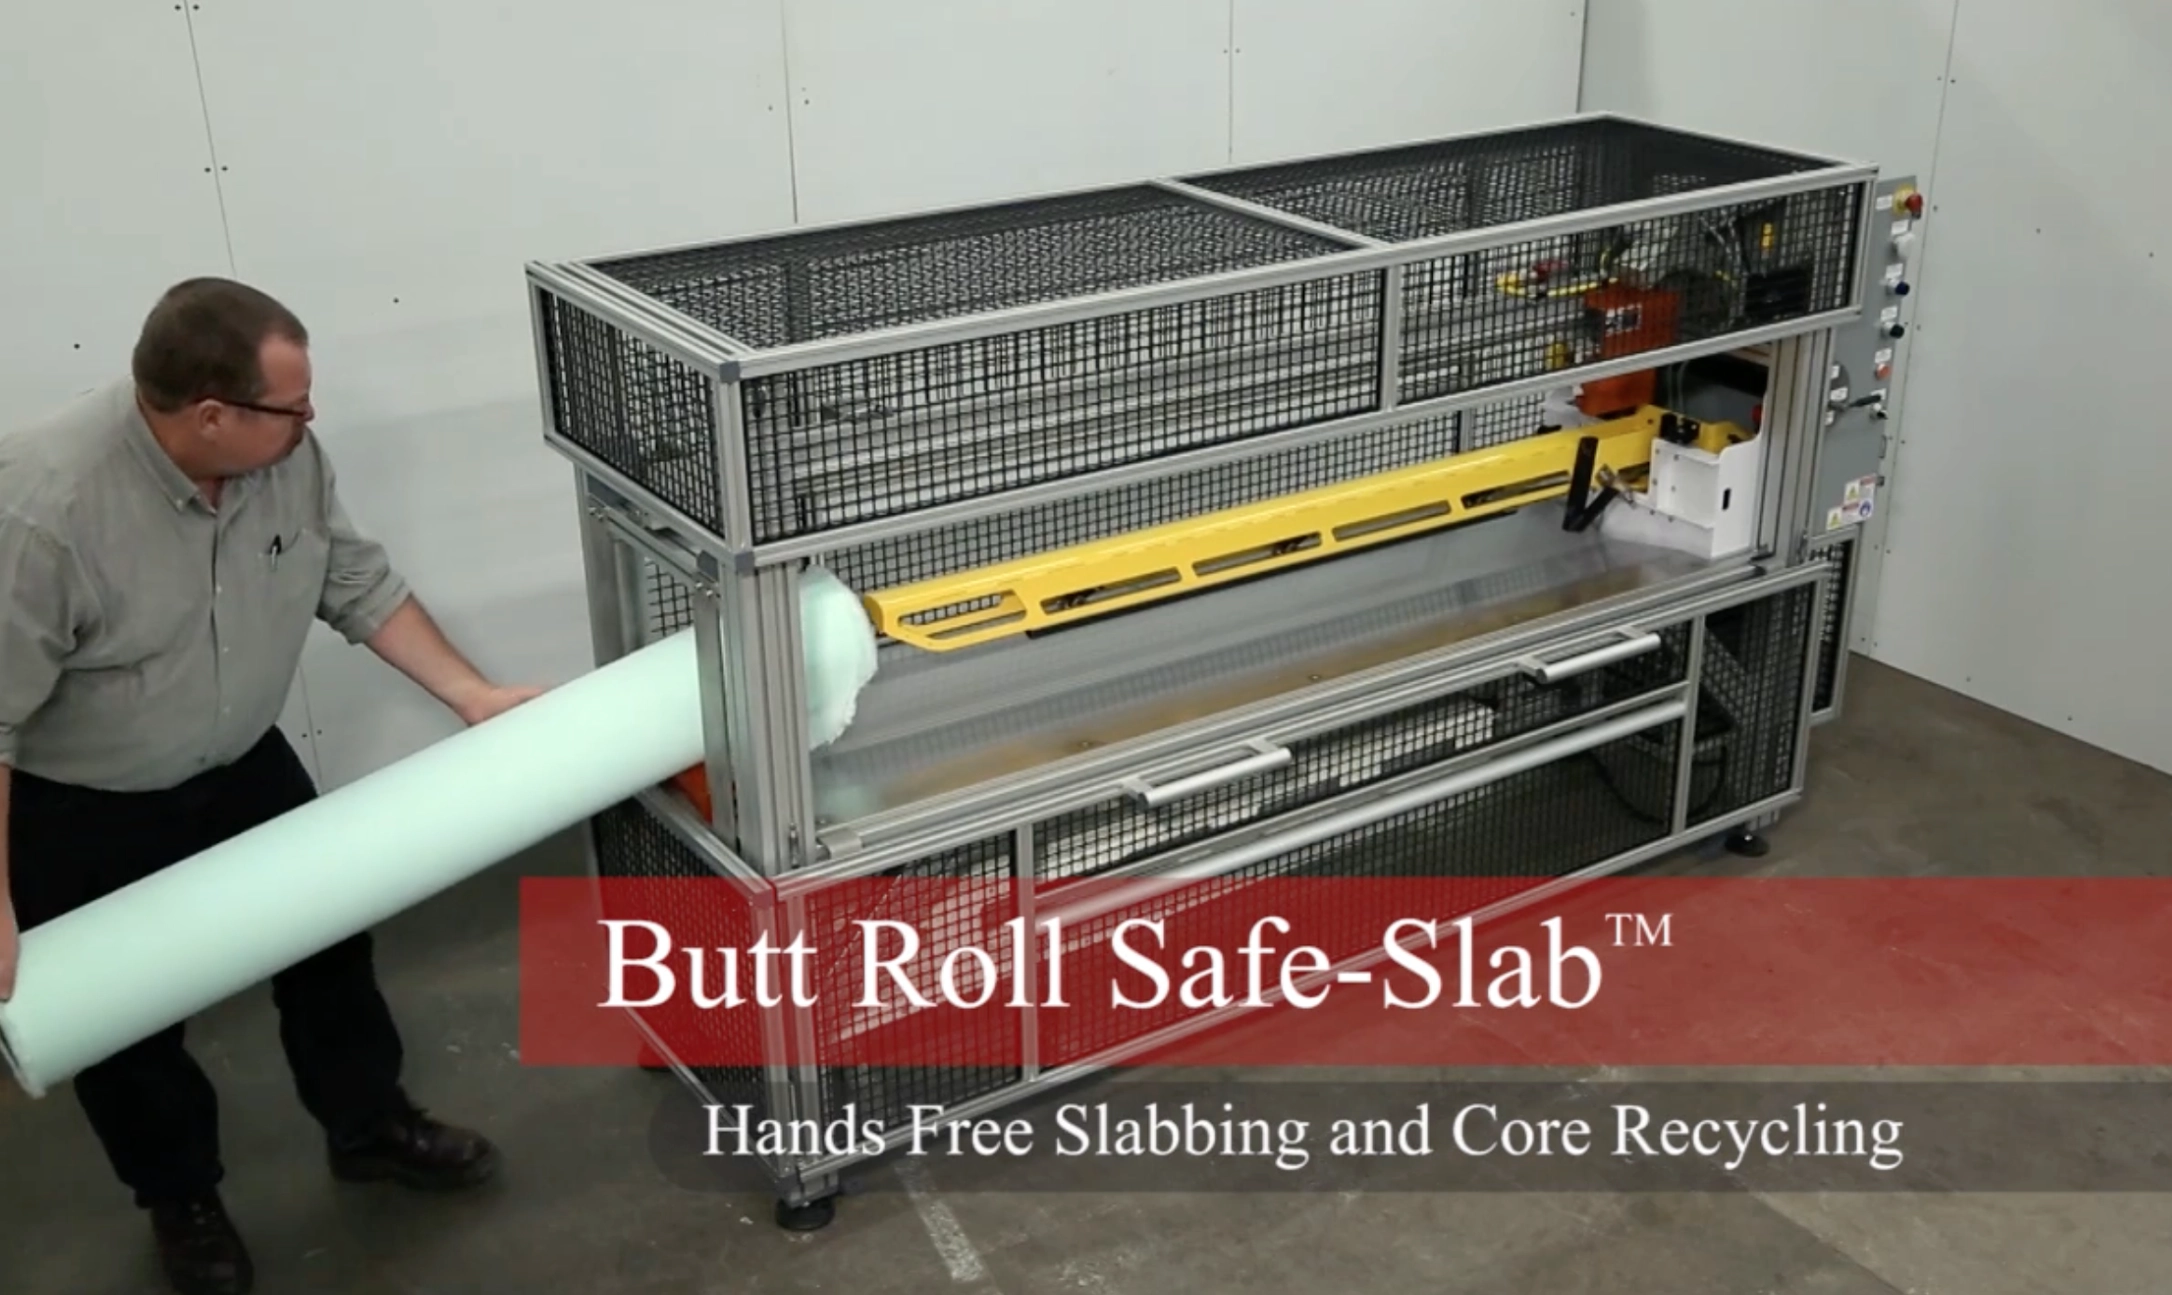 Butt Roll Safe-Slab™ Overview